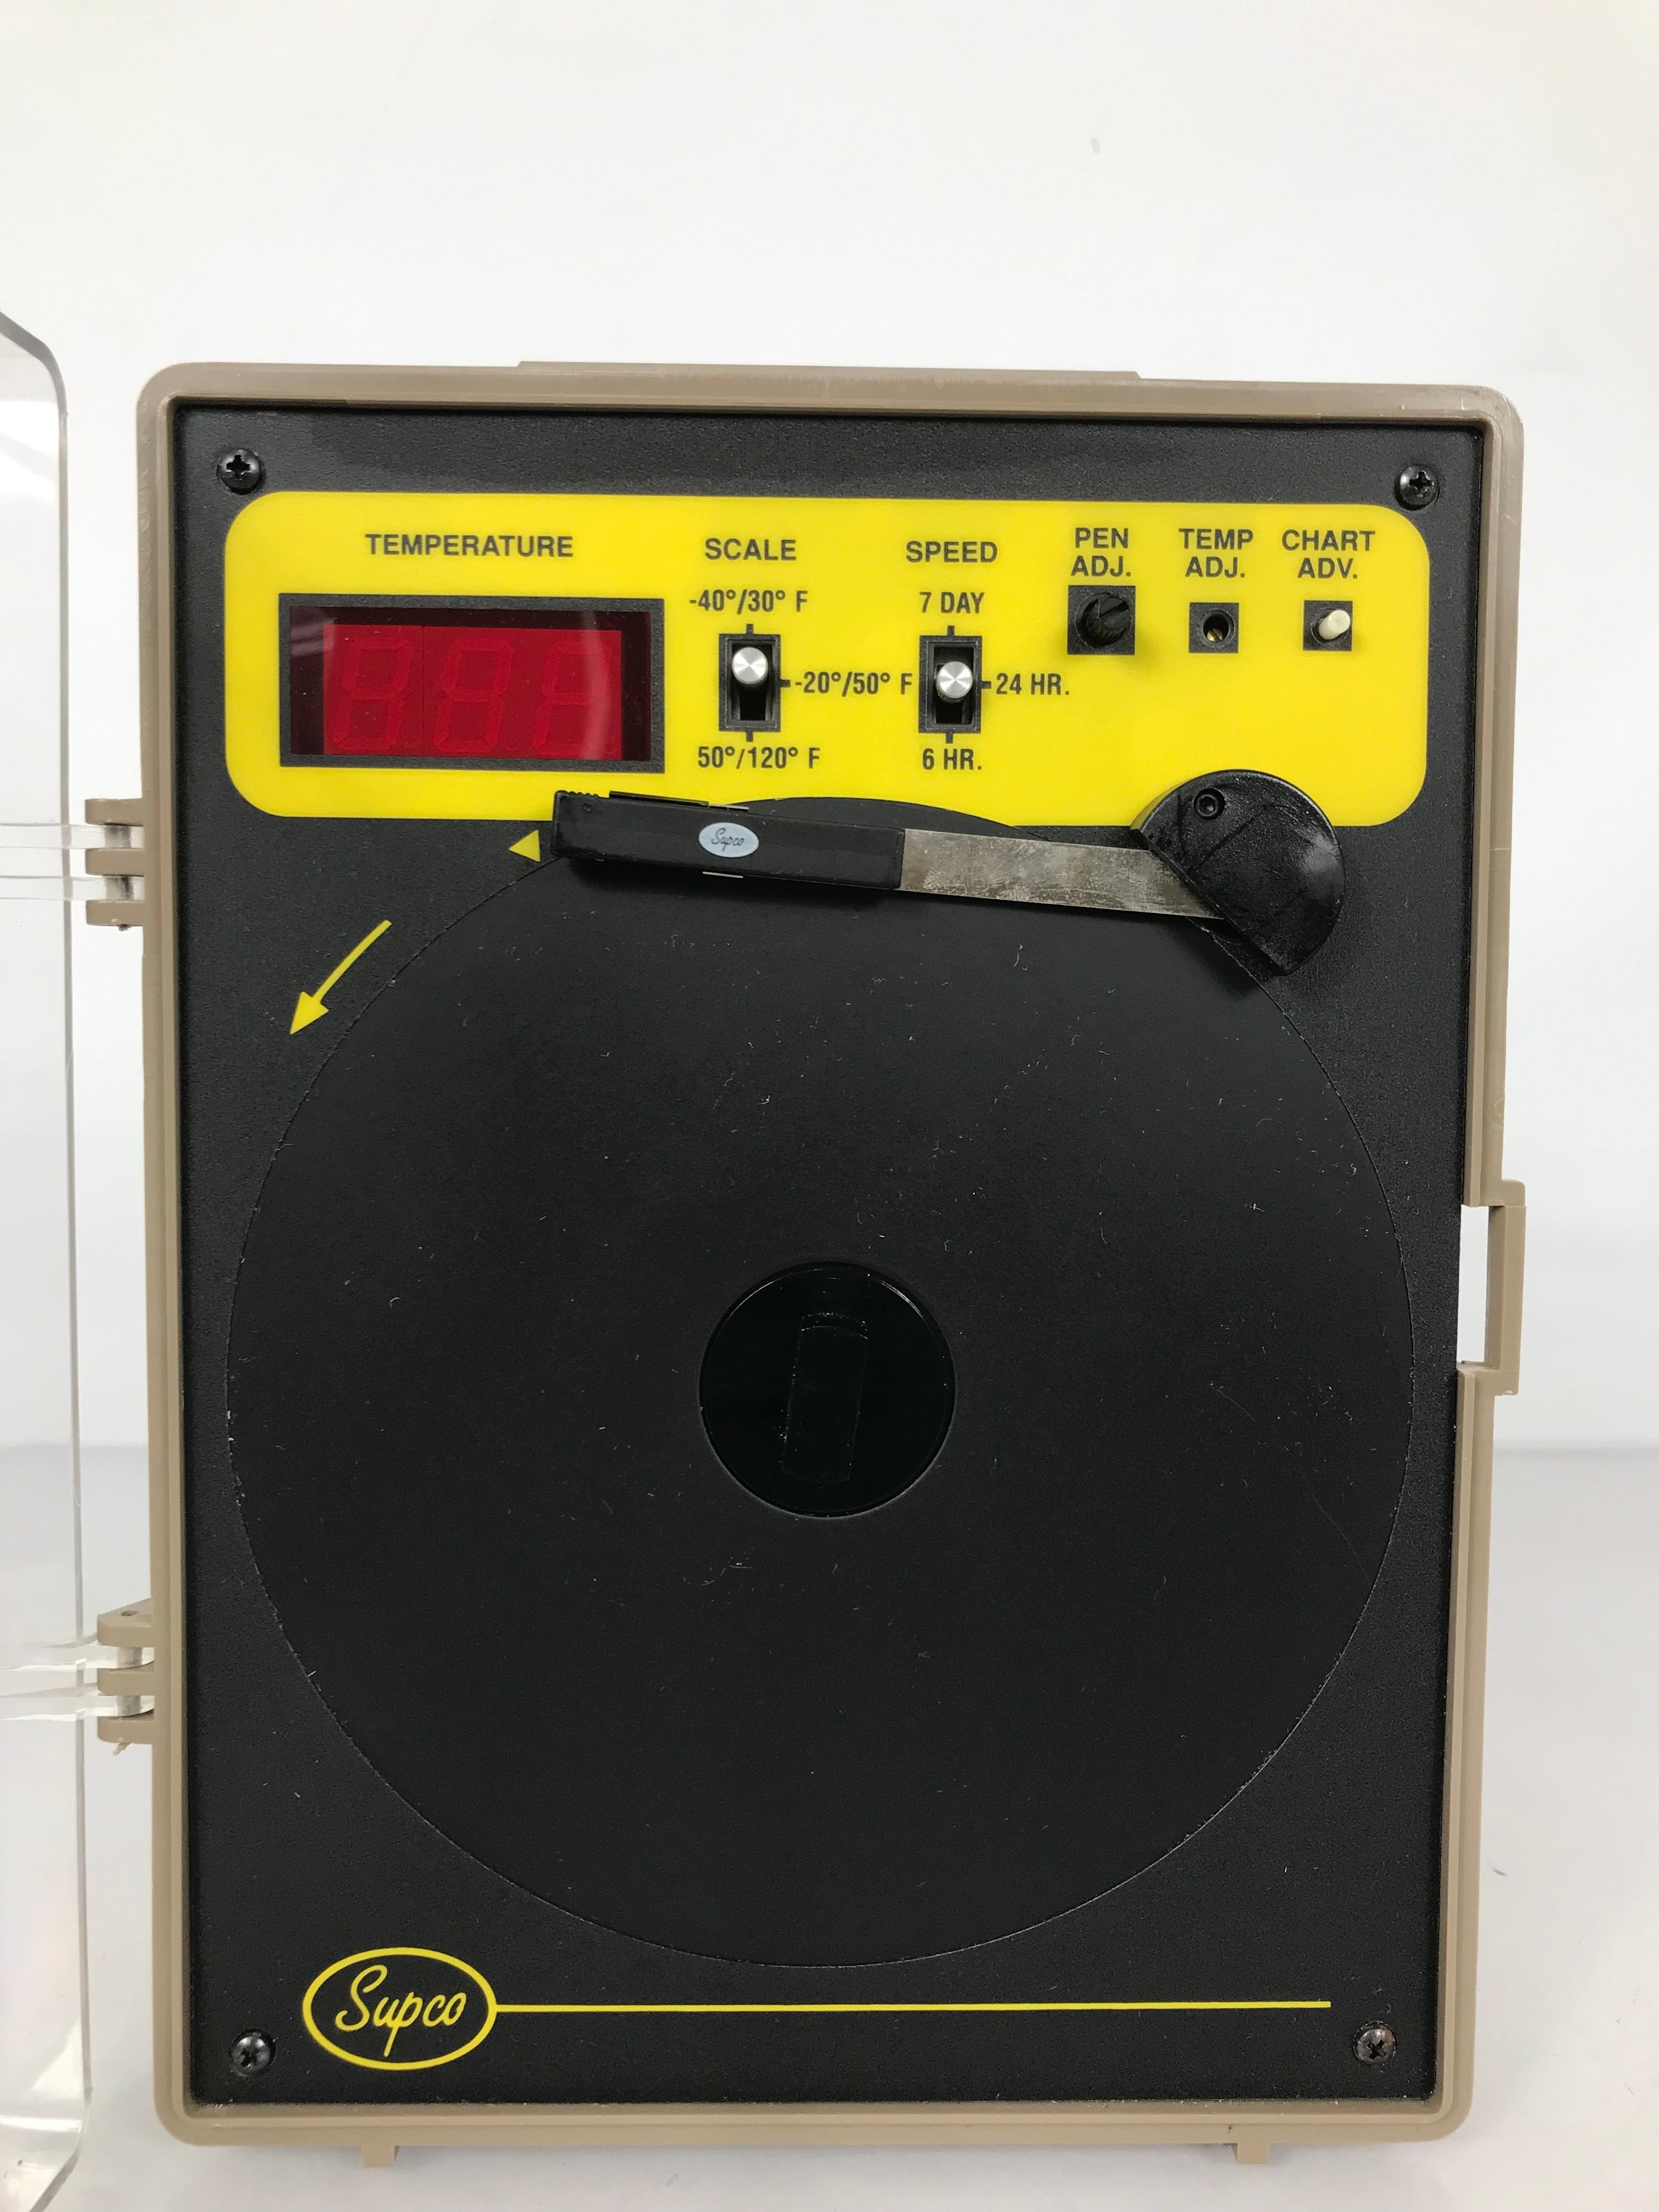 Supco CR-87 Temperature Recorder